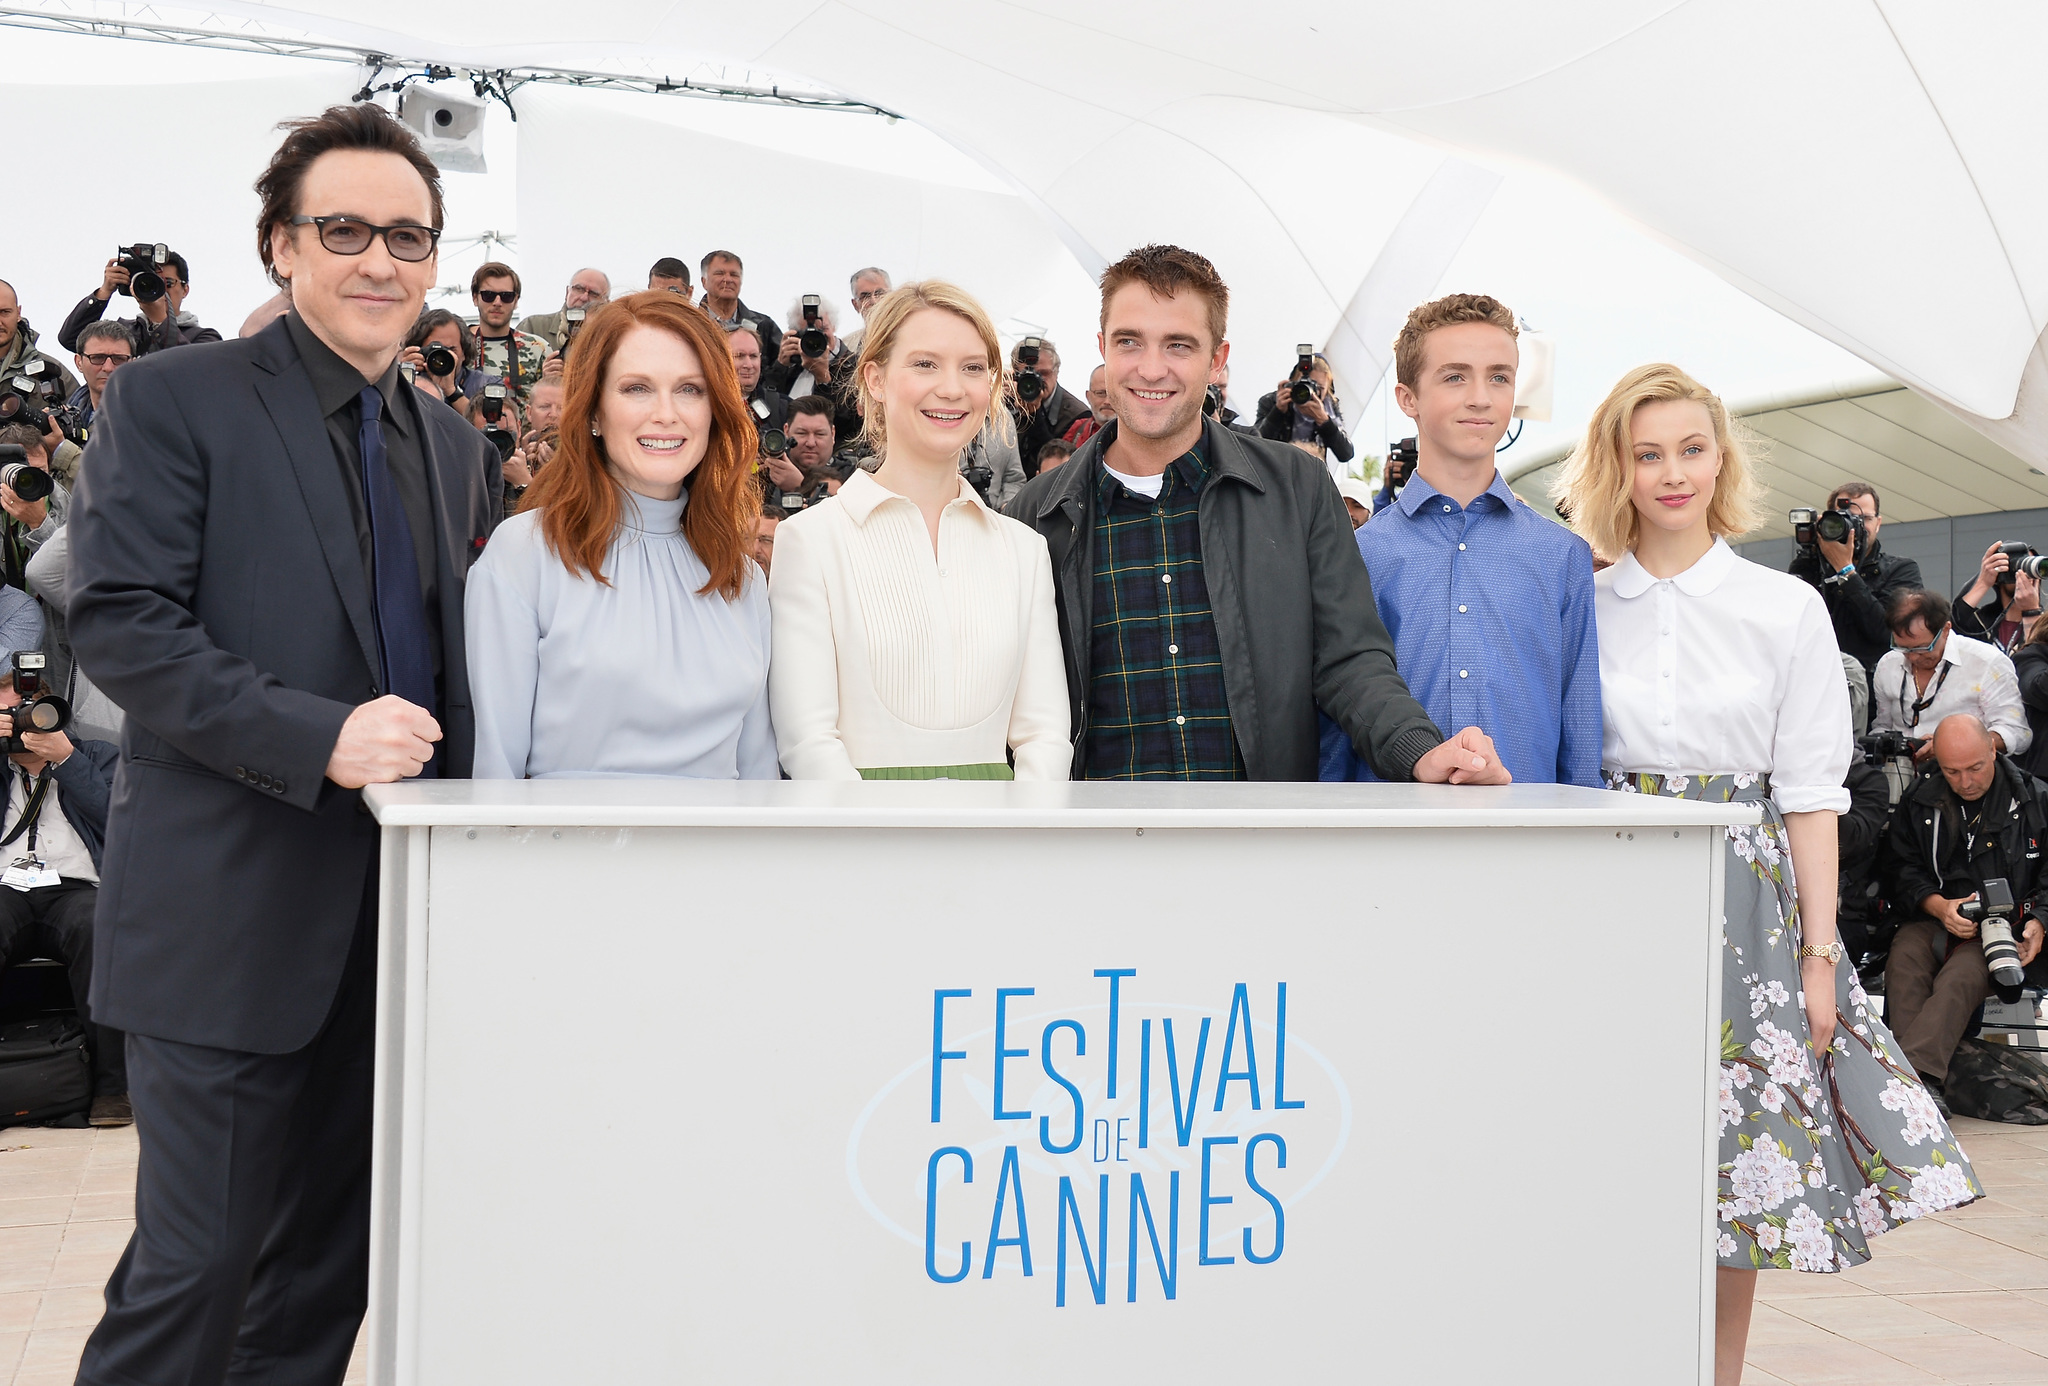 John Cusack, Julianne Moore, Sarah Gadon, Robert Pattinson, Mia Wasikowska and Evan Bird at event of Maps to the Stars (2014)